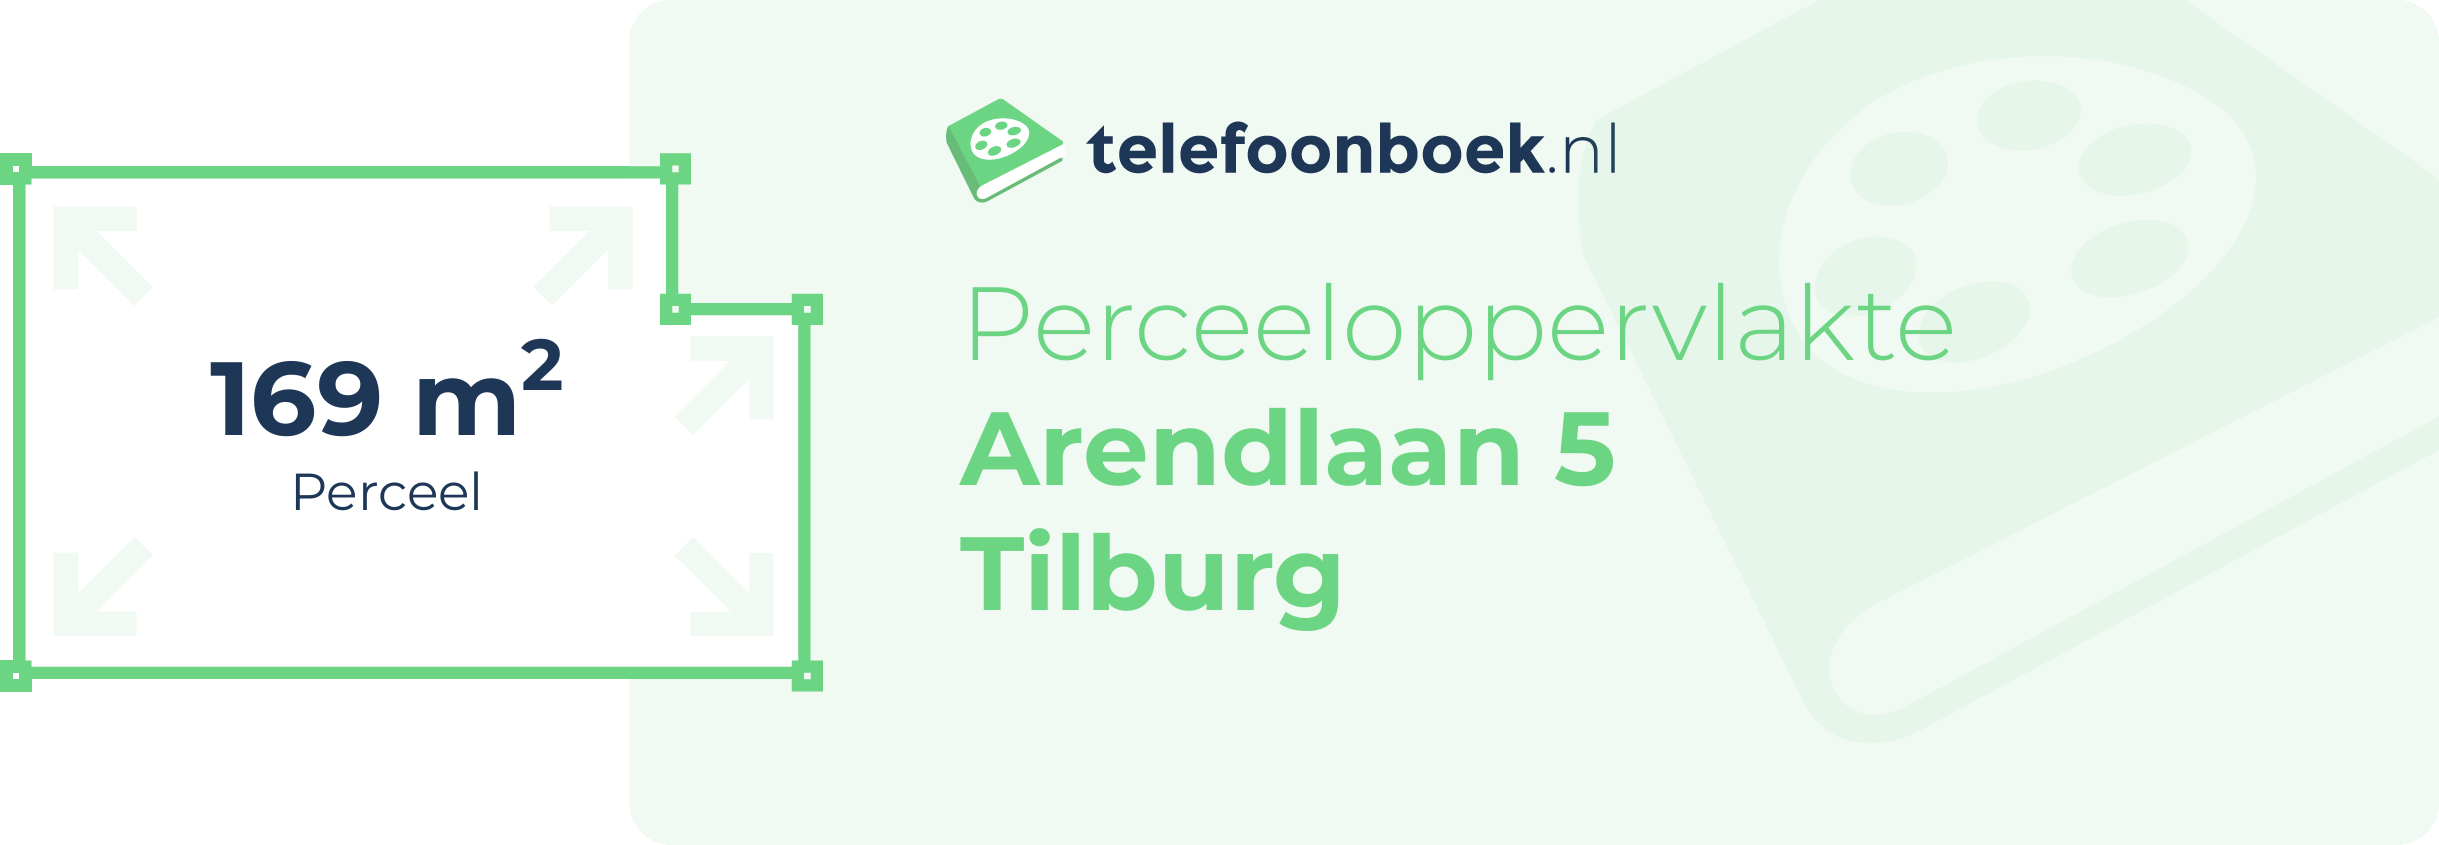 Perceeloppervlakte Arendlaan 5 Tilburg